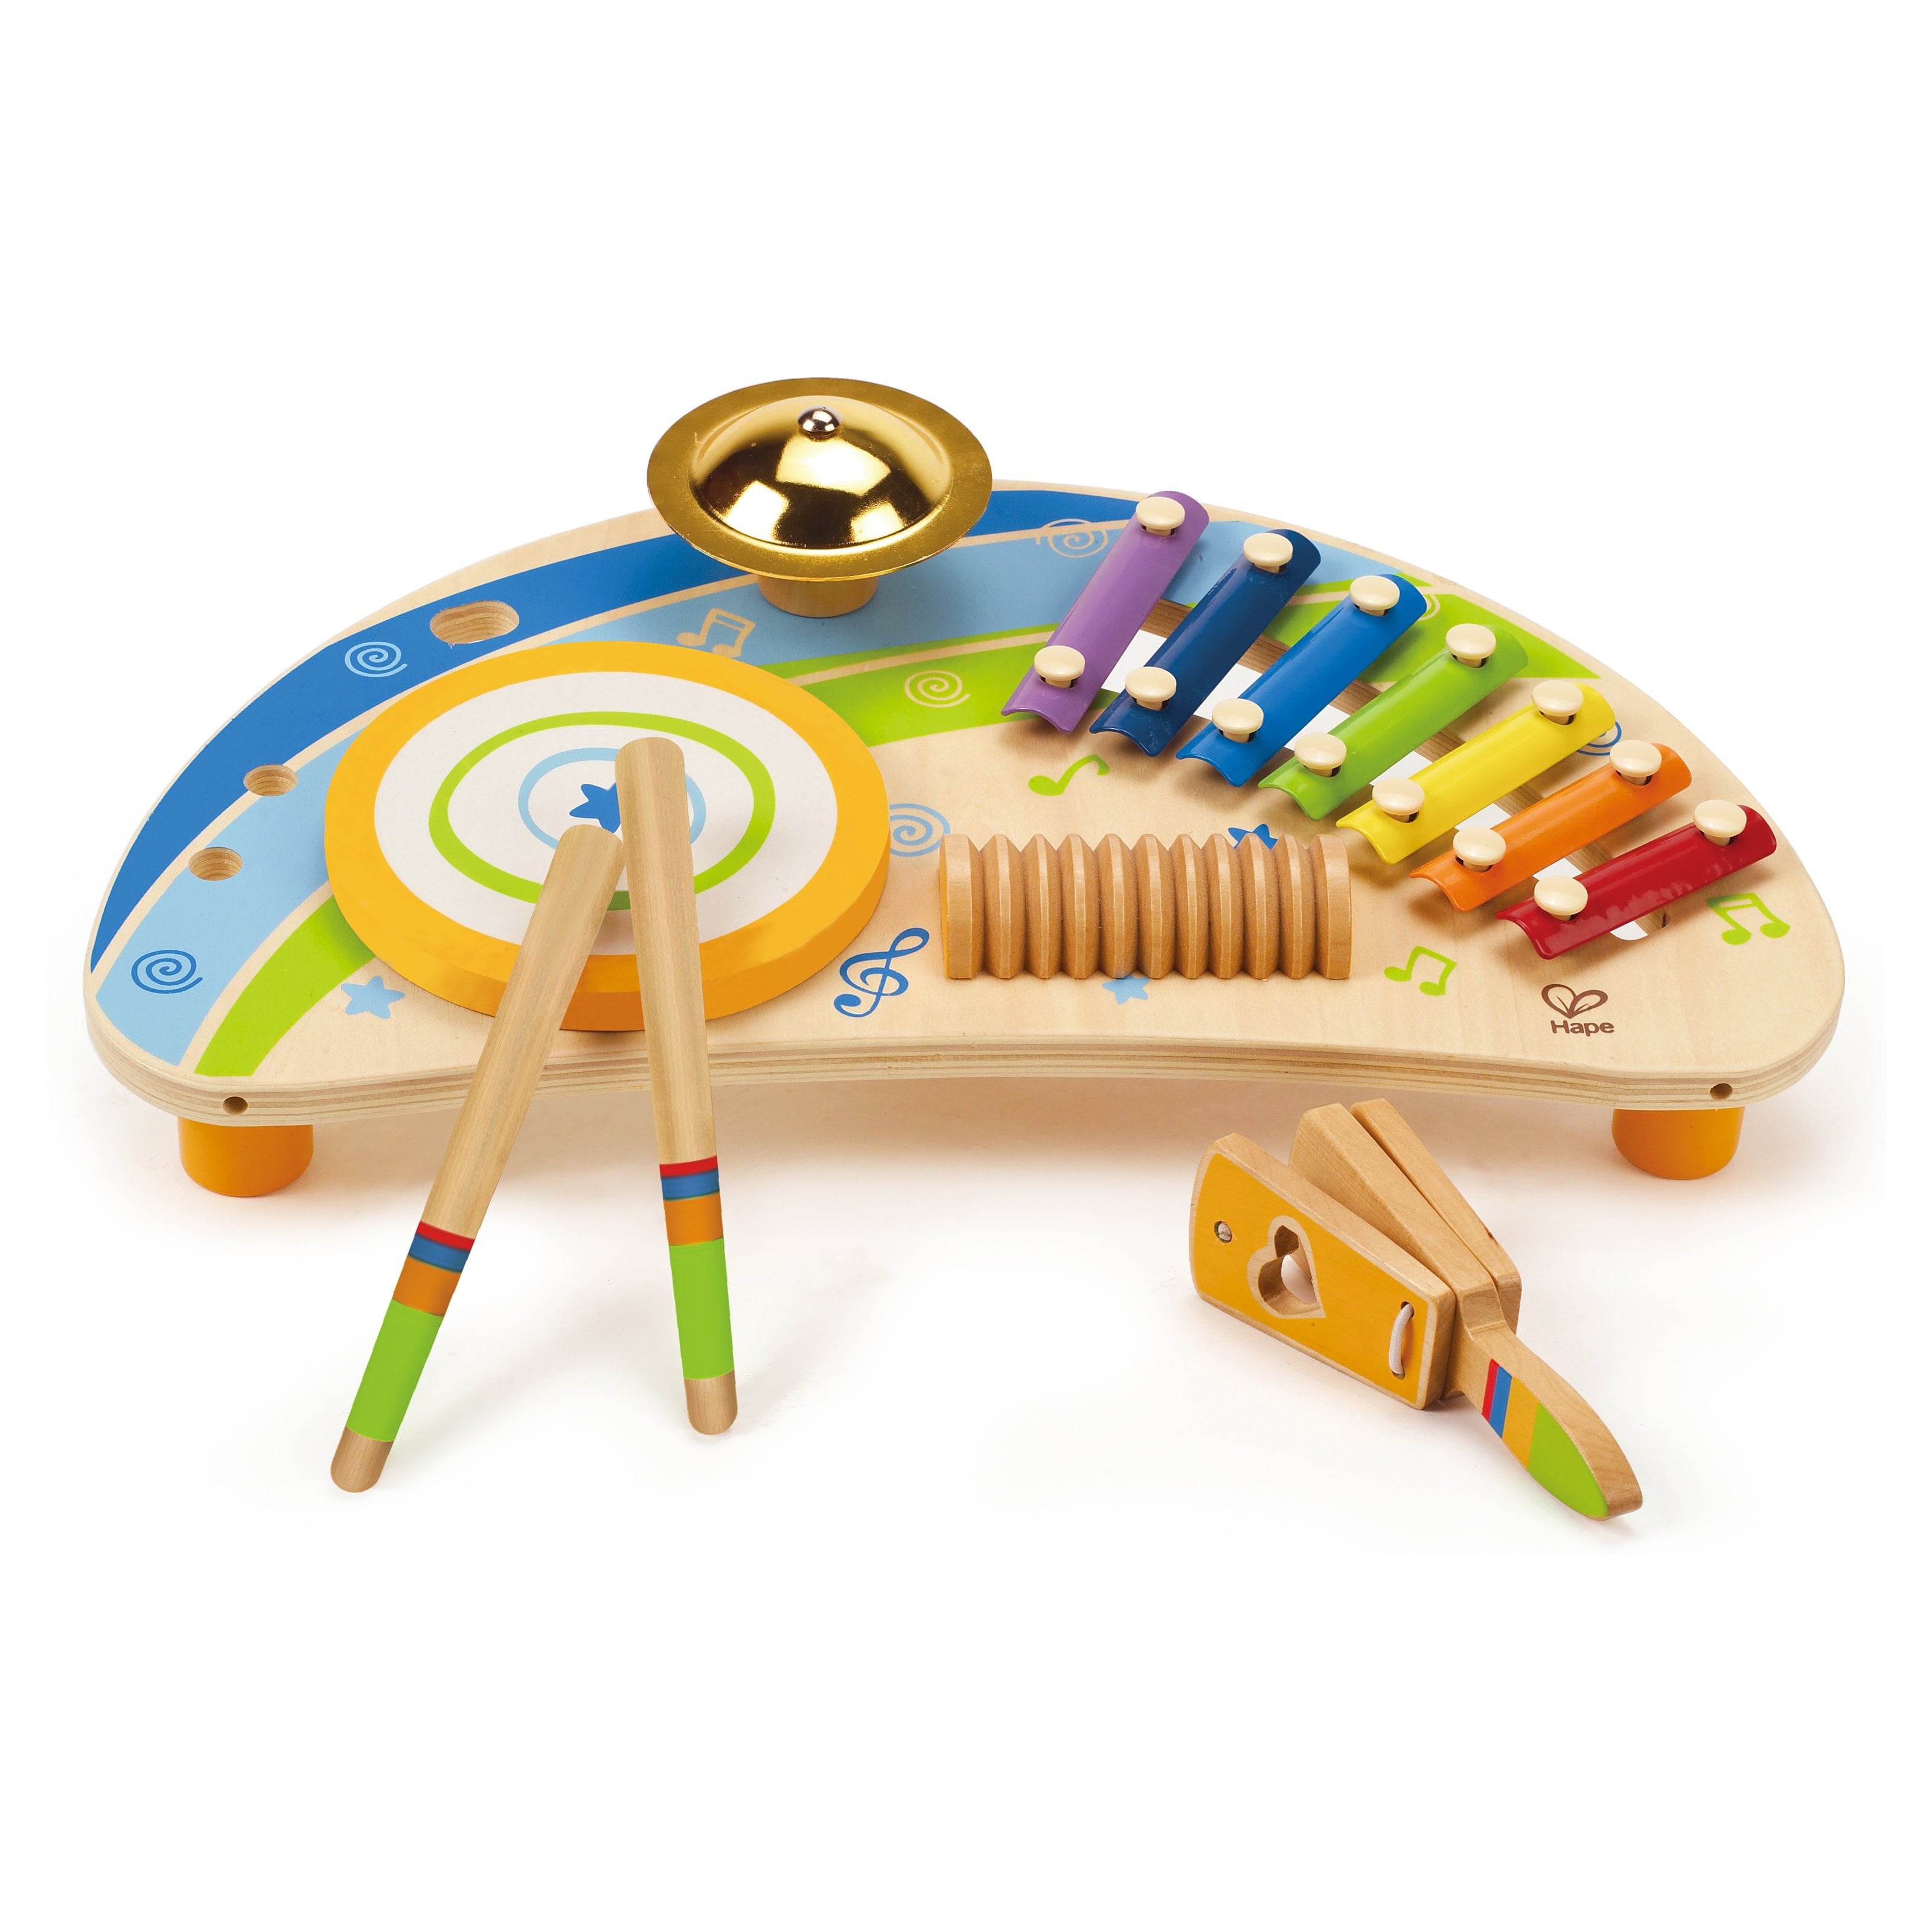 Multicoloured Hape E0612 Toy